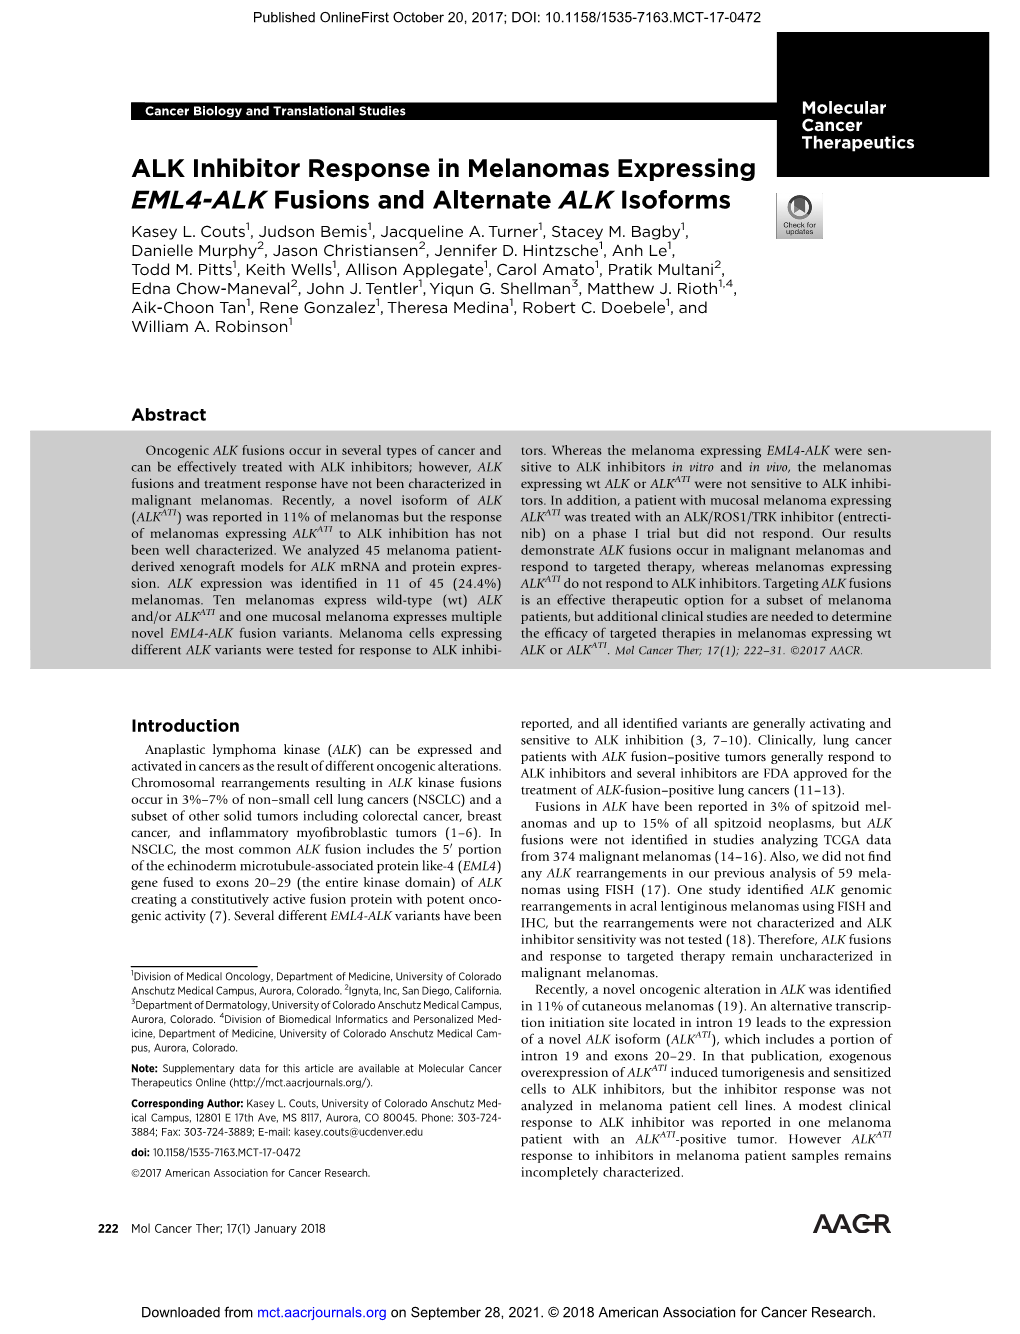 ALK Inhibitor Response in Melanomas Expressing EML4-ALK Fusions and Alternate ALK Isoforms Kasey L